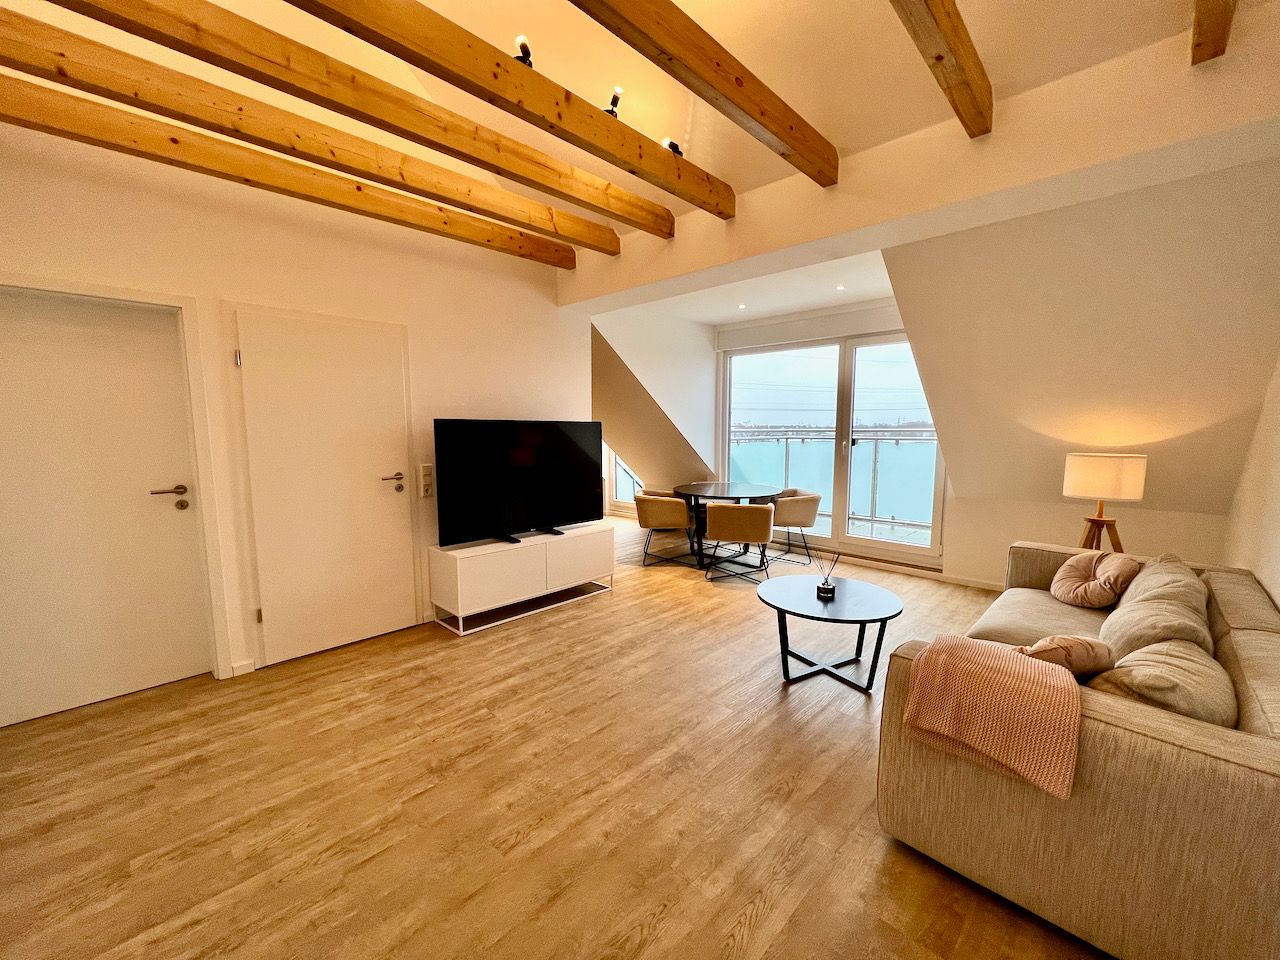 Dream apartment in central location of Dortmund